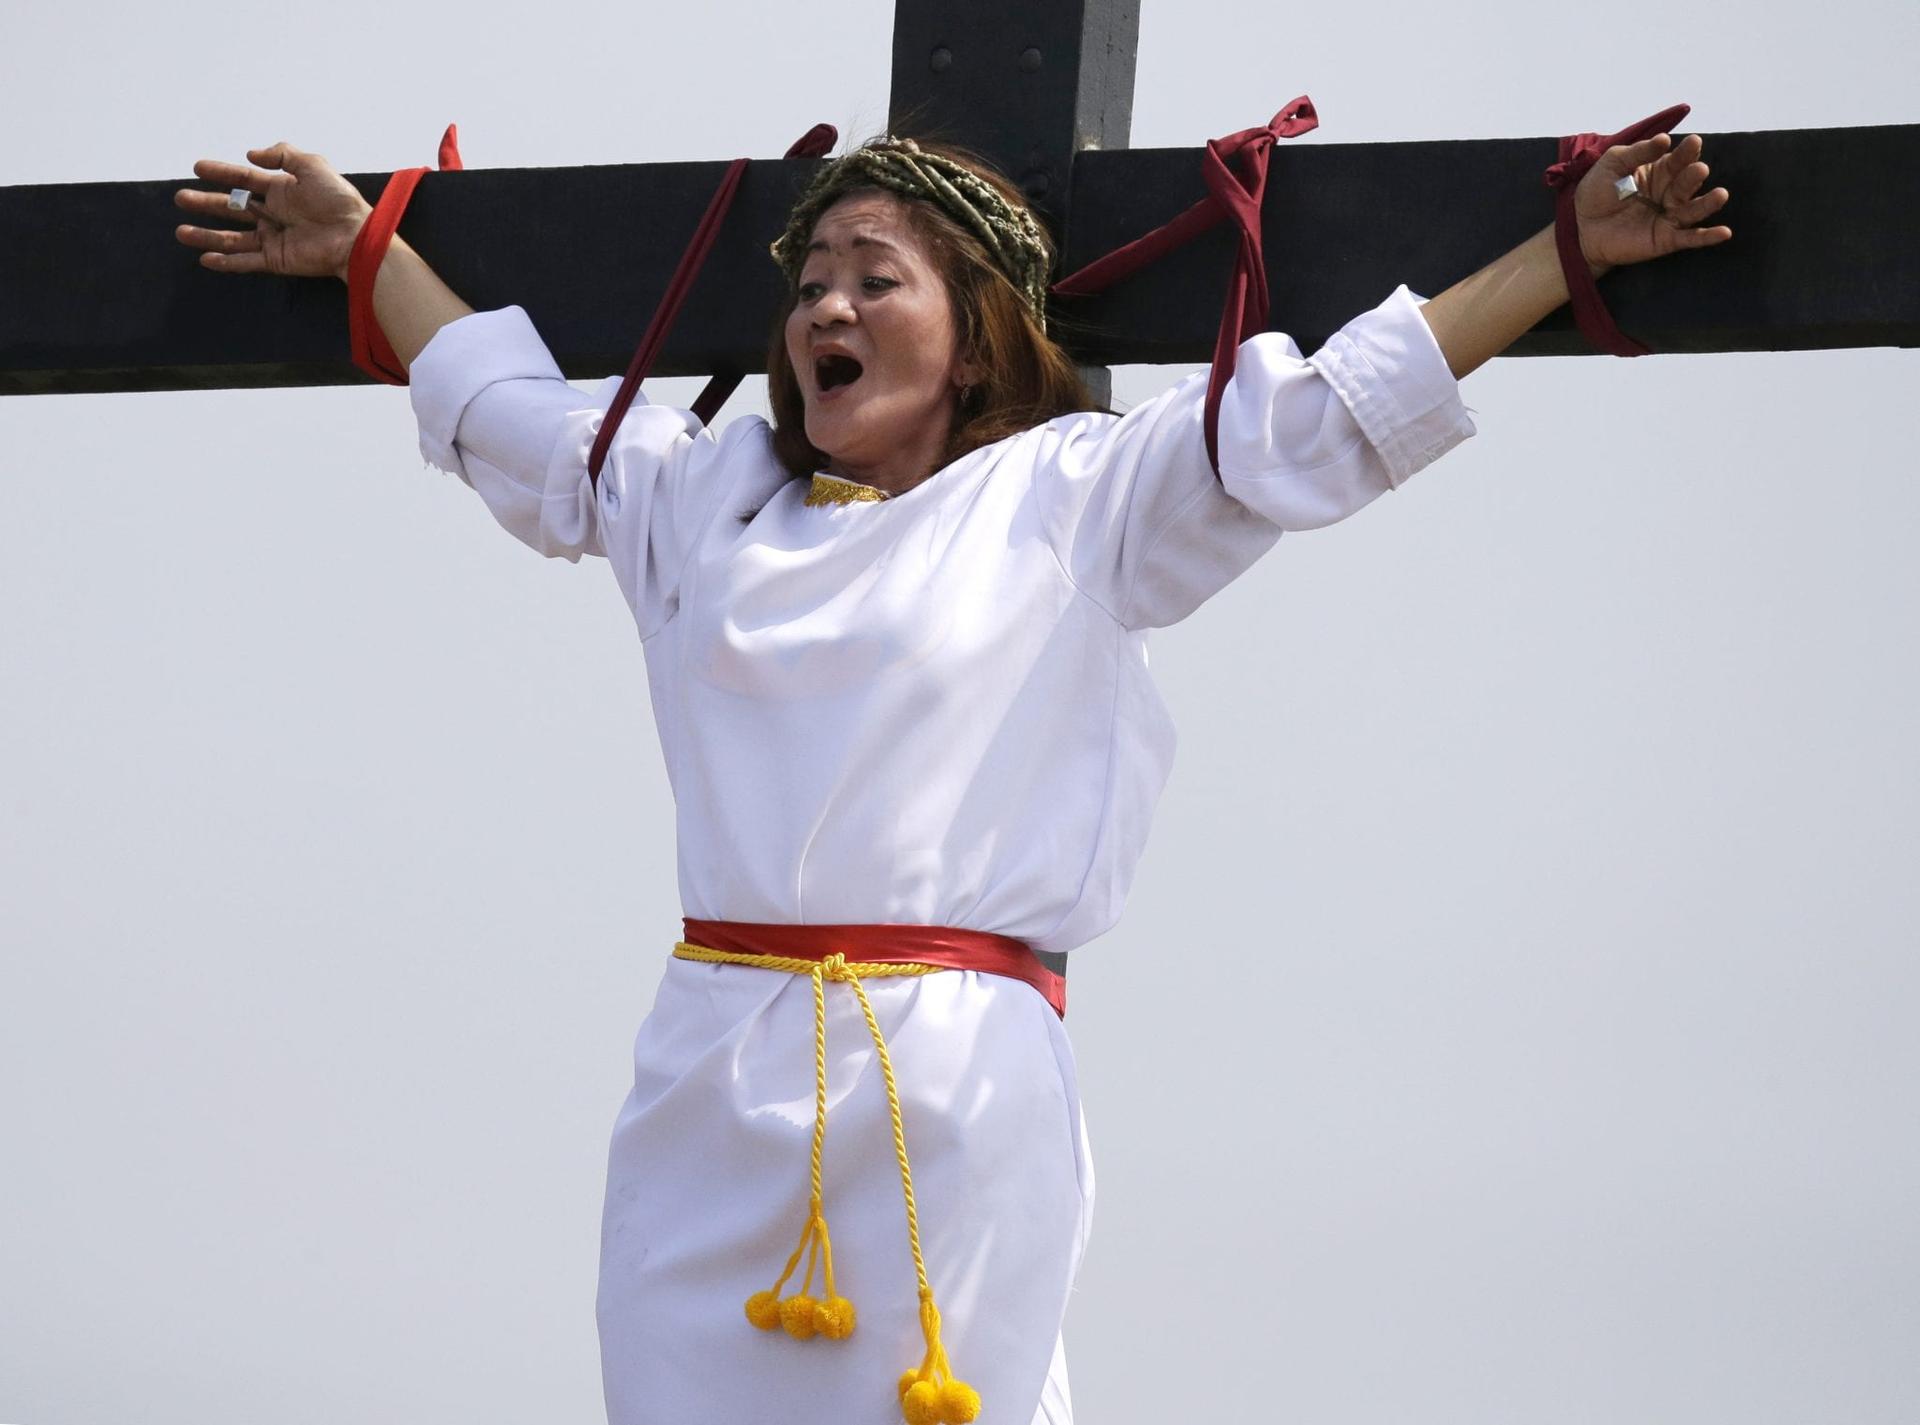 Filipino devotees reenact Good Friday crucifixion